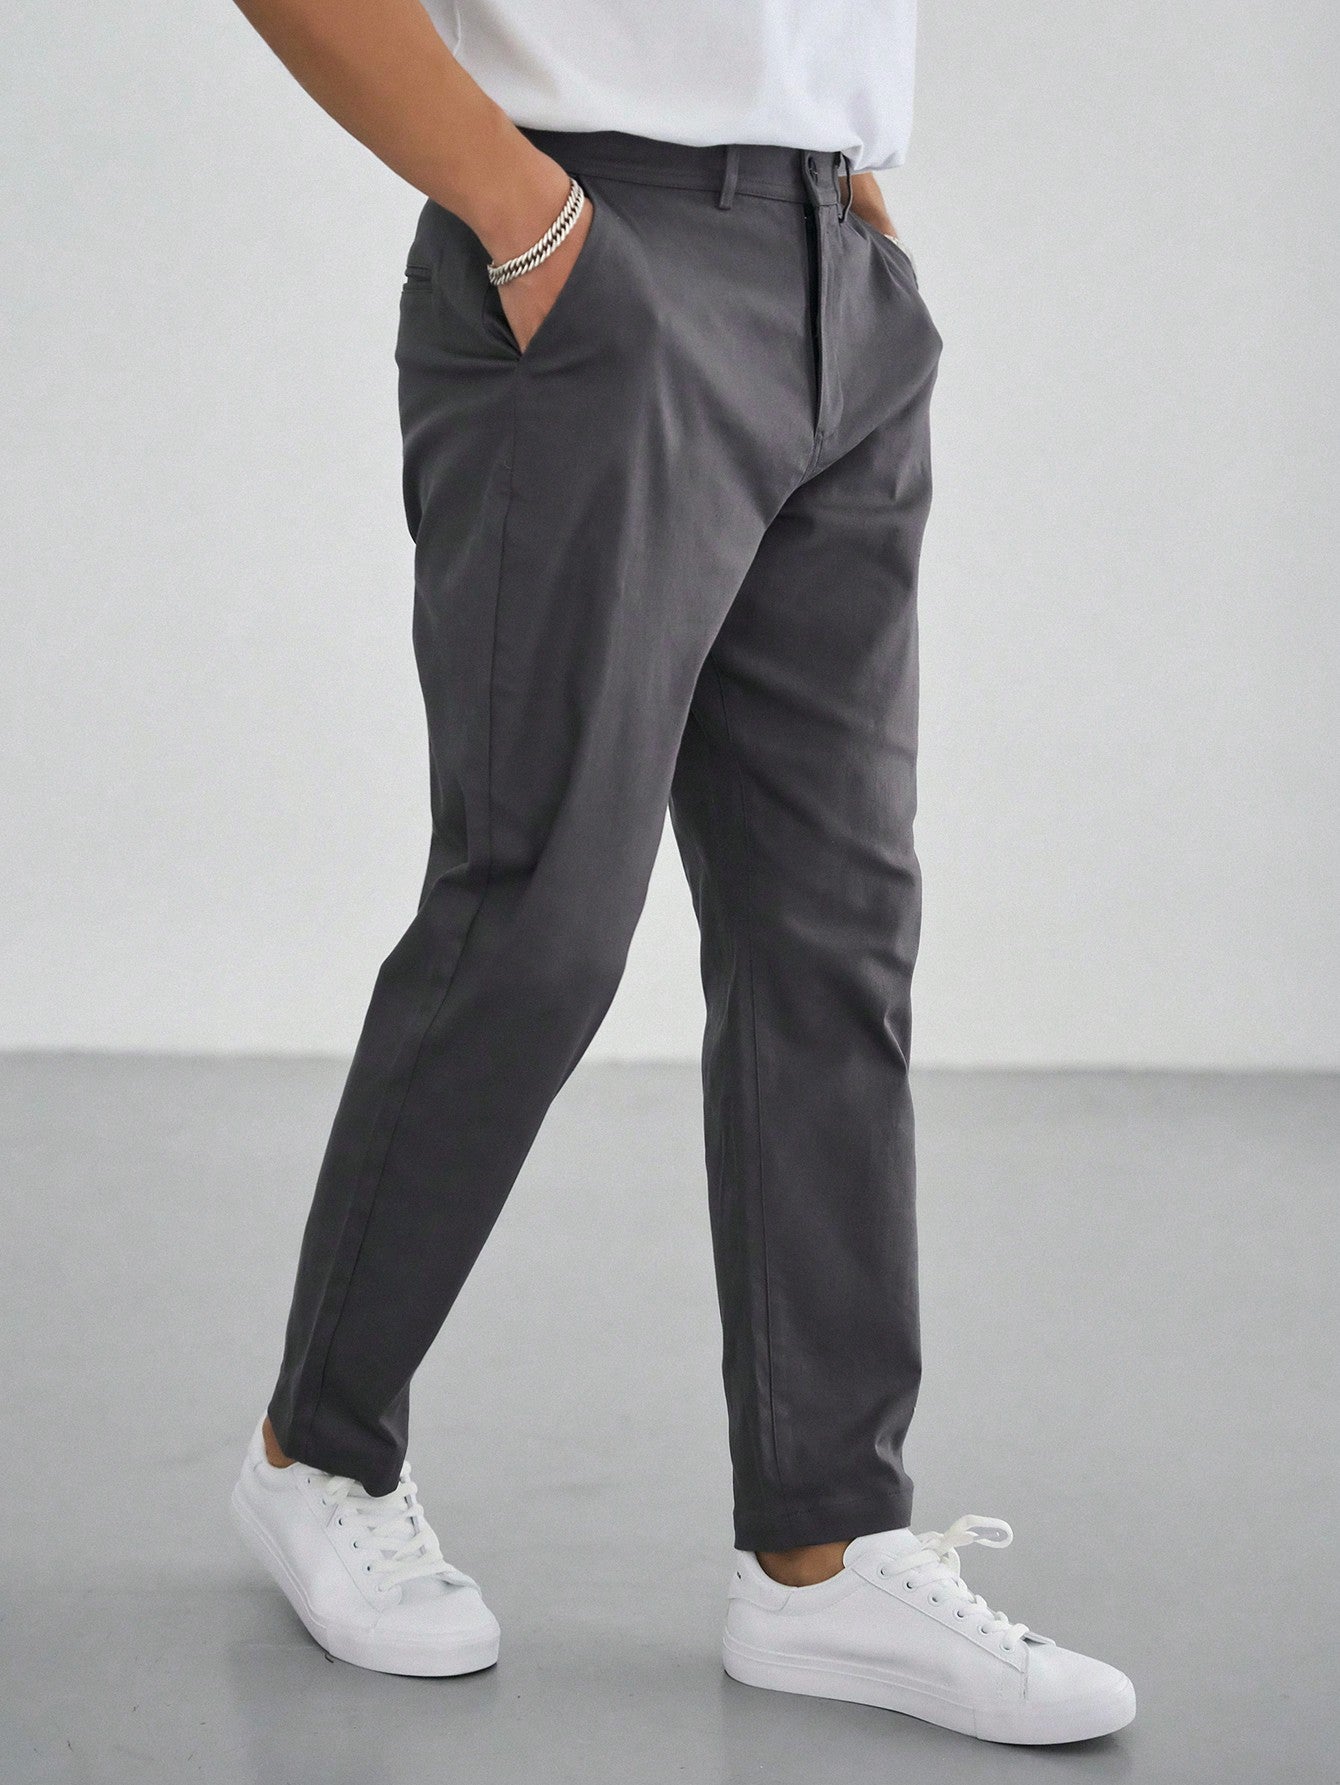 Kpop Men's Straight-leg Pants With Side Pockets